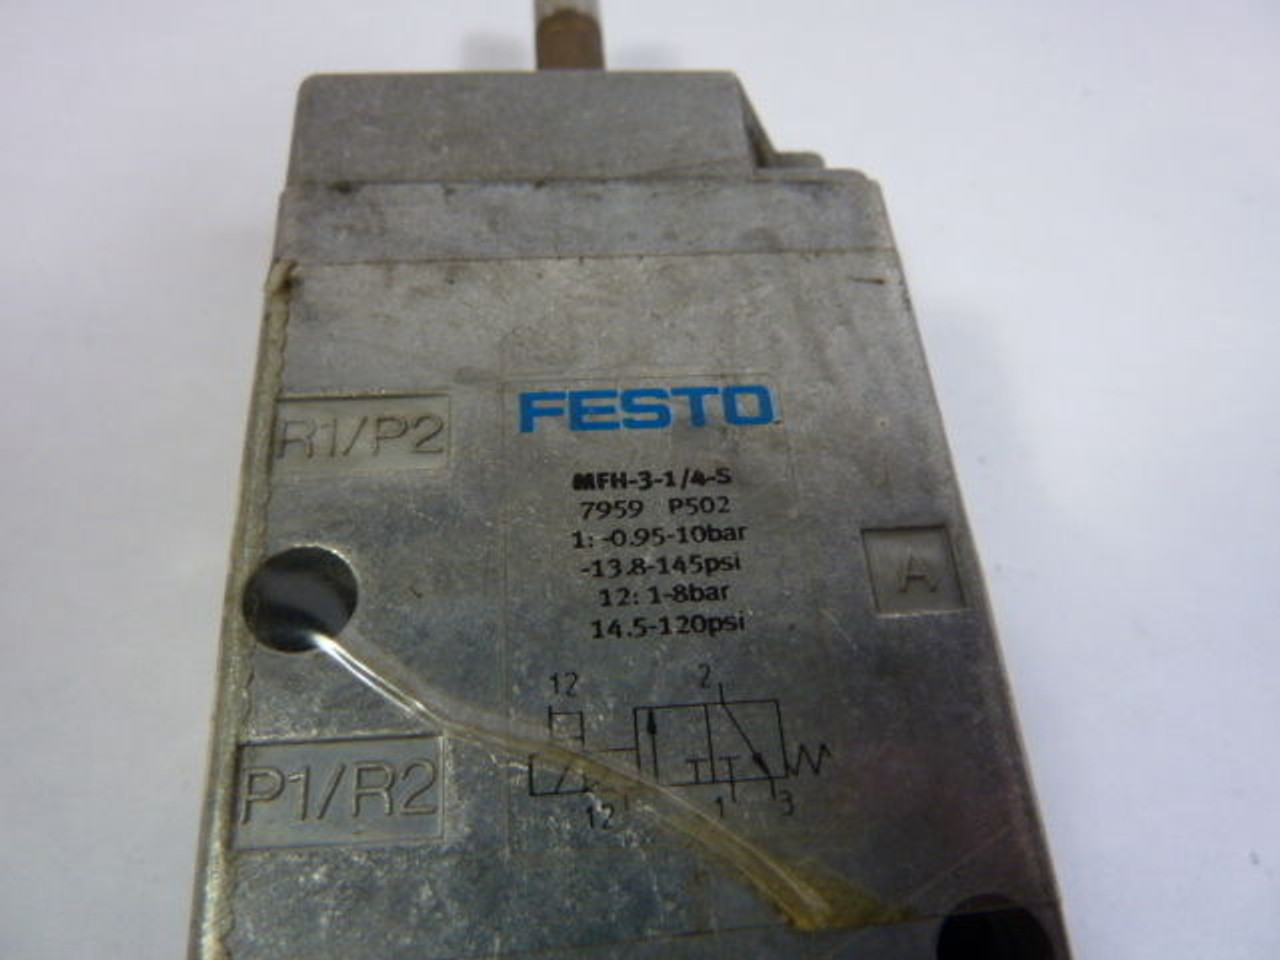 Festo MFH-3-1/4-S 7959 Solenoid Valve Manual Override USED